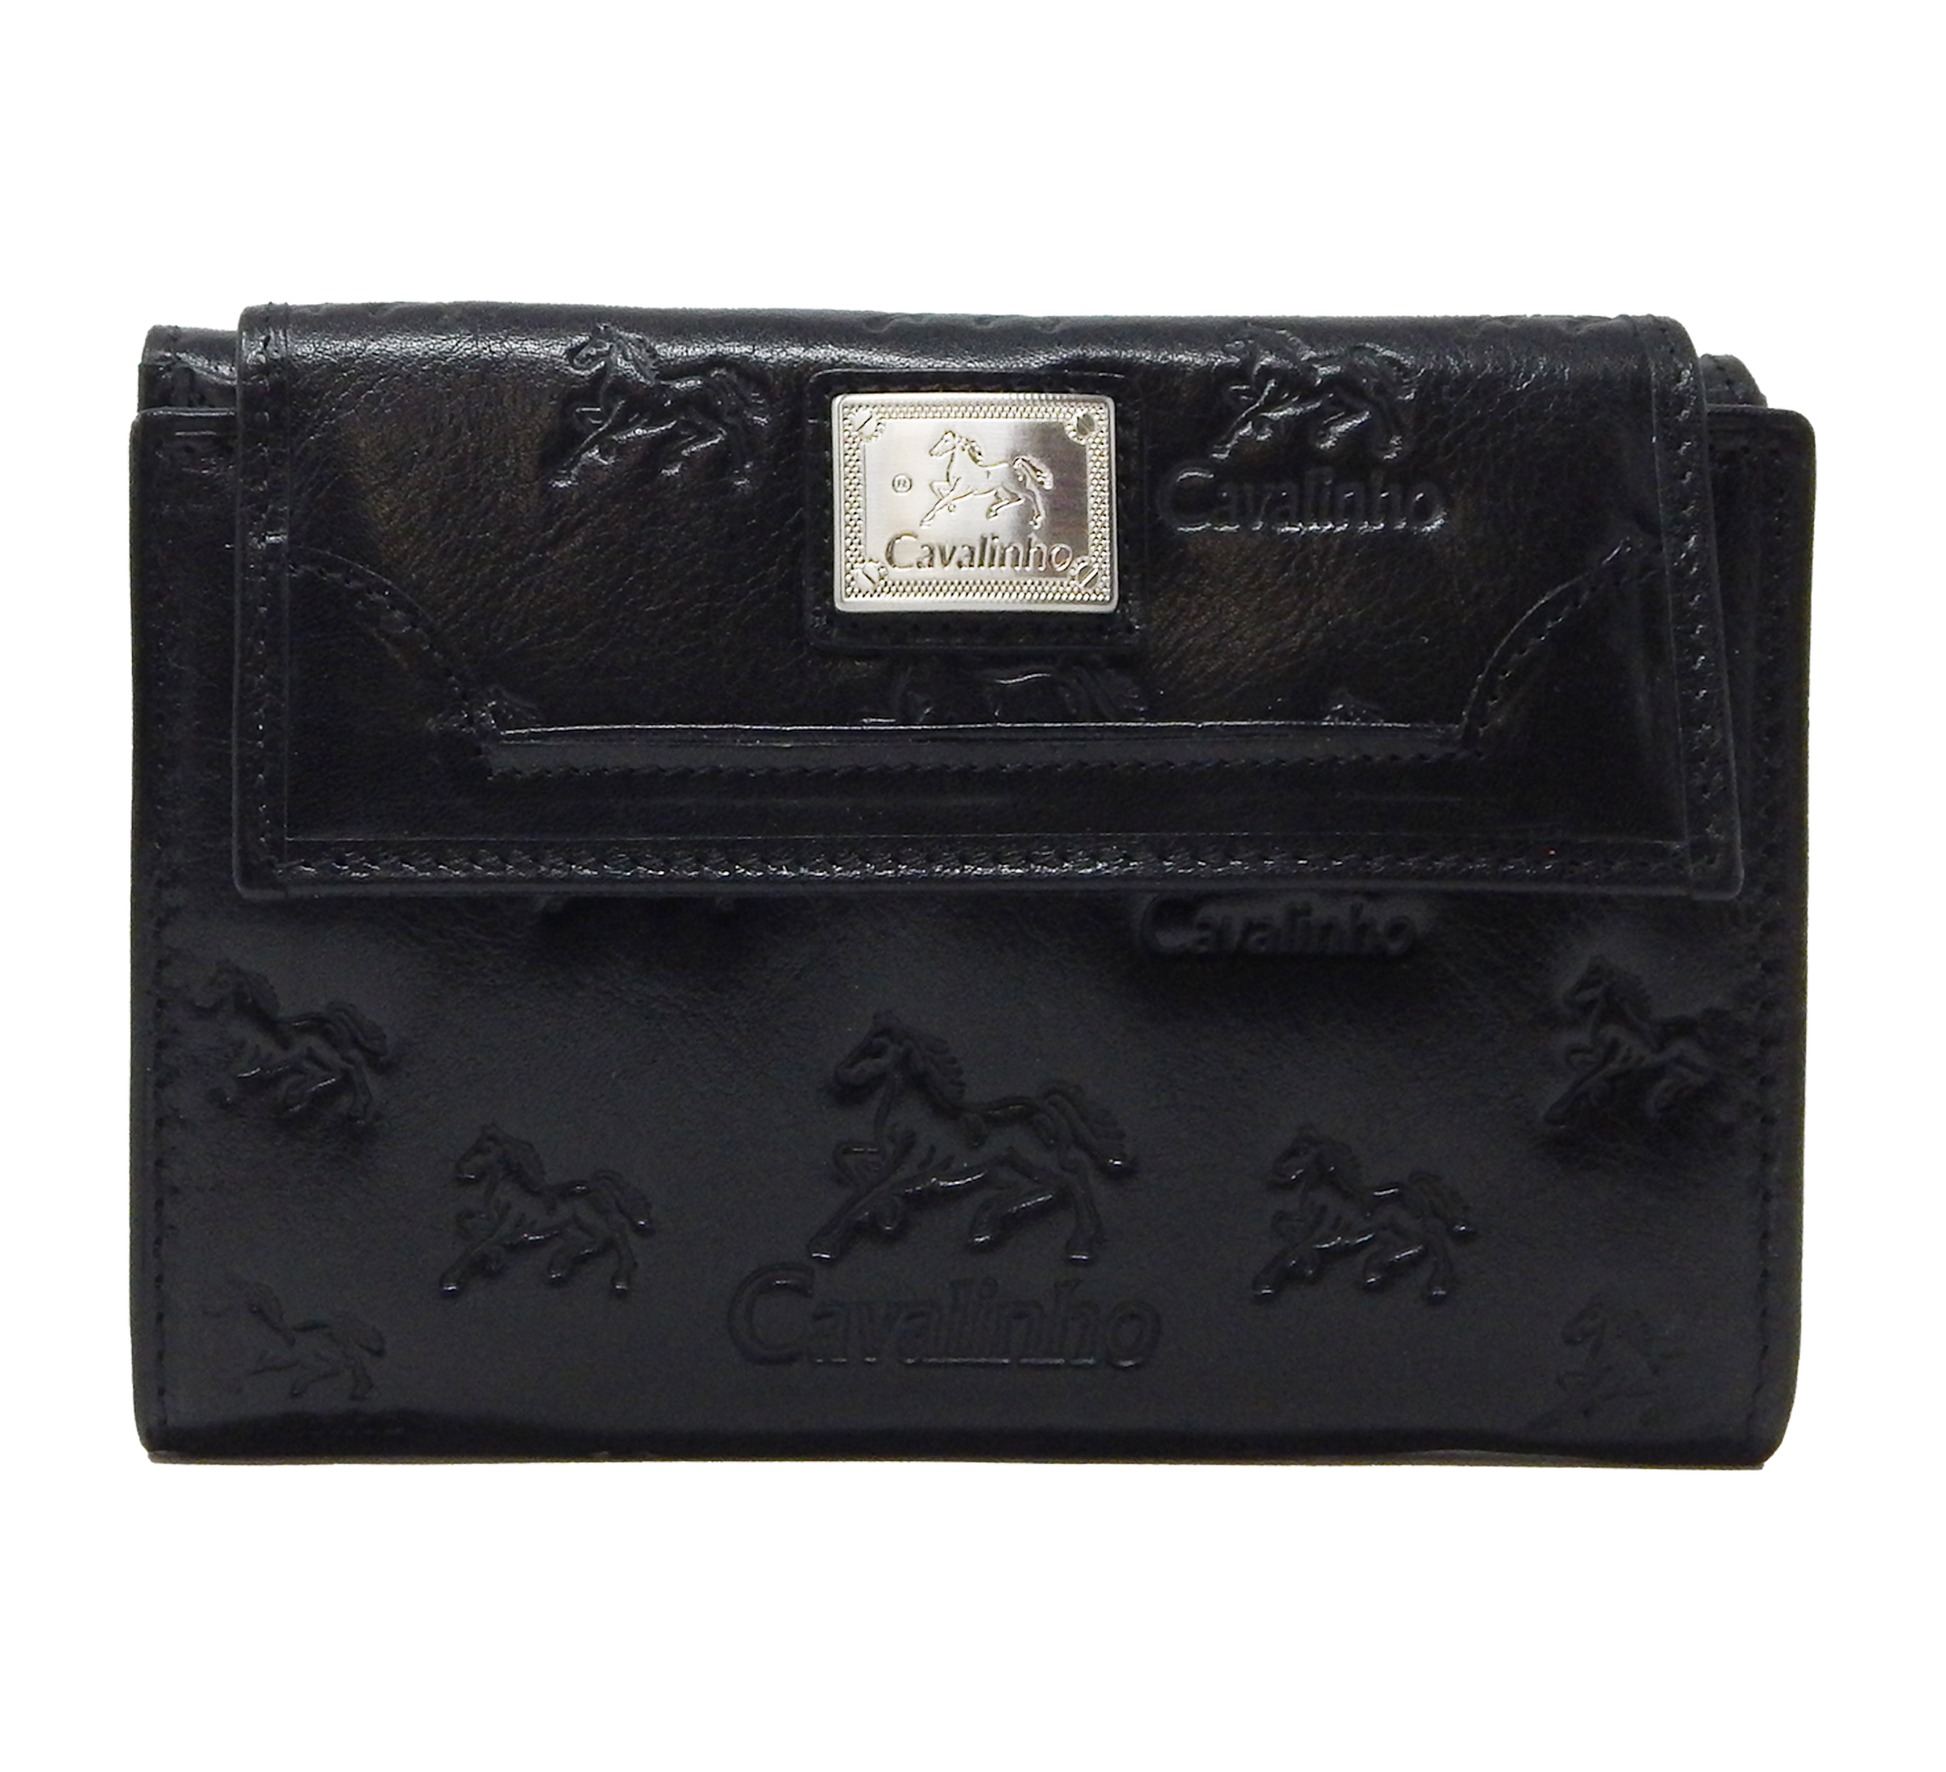 Cavalinho Cavalo Lusitano Leather Wallet - Black - 28090205.01_1